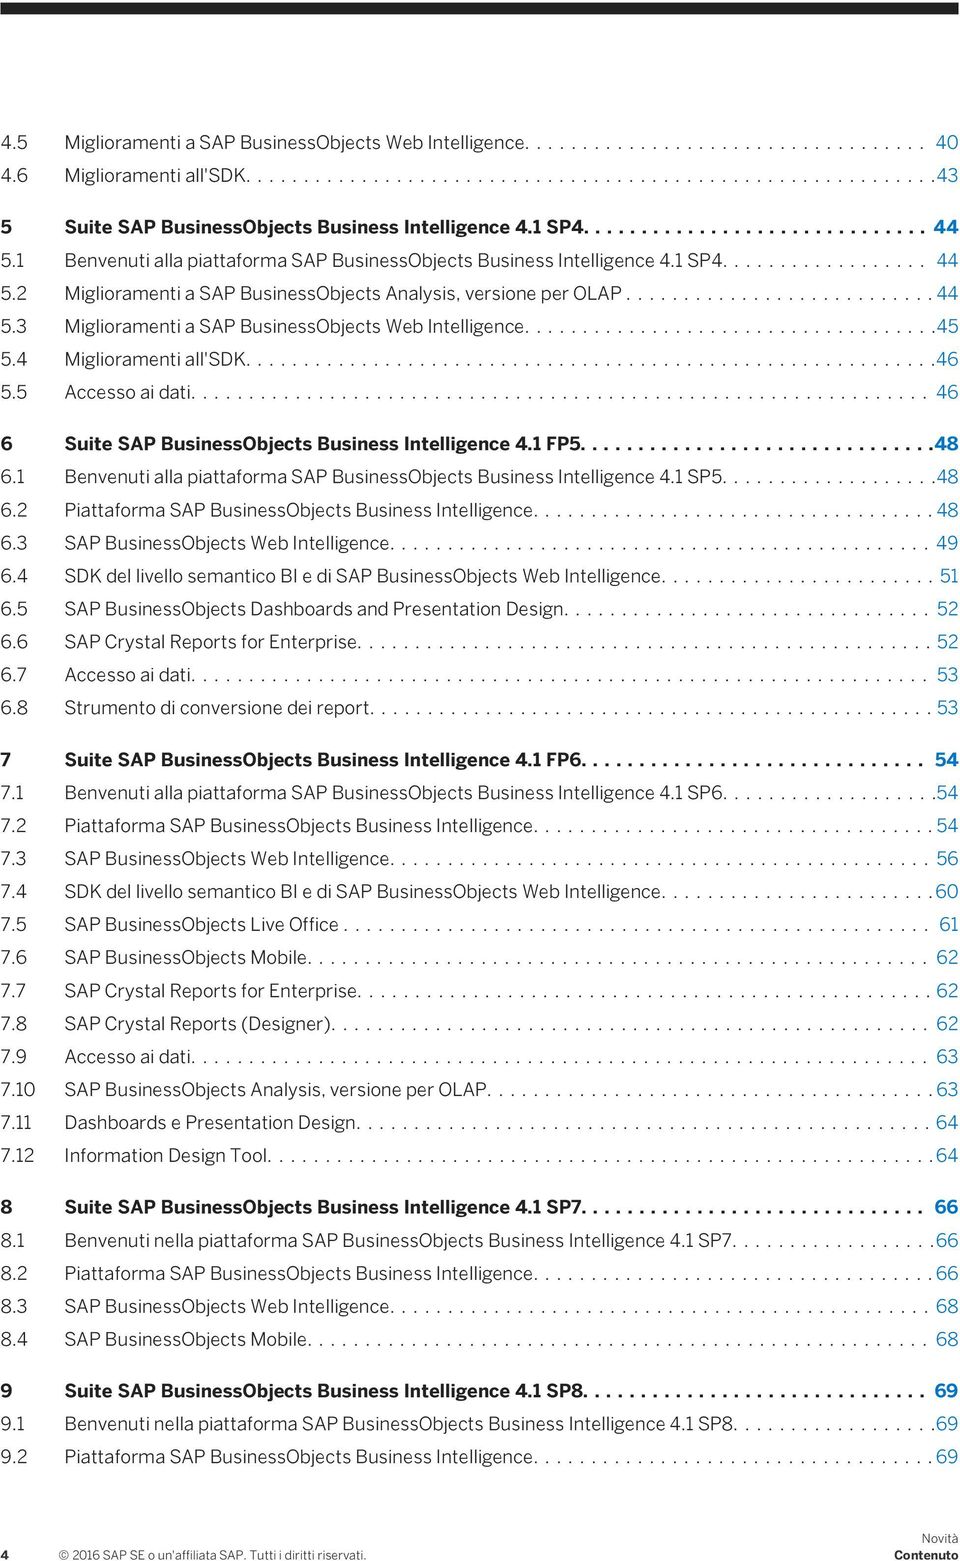 ...45 5.4 Miglioramenti all'sdk....46 5.5 Accesso ai dati.... 46 6 Suite SAP BusinessObjects Business Intelligence 4.1 FP5....48 6.